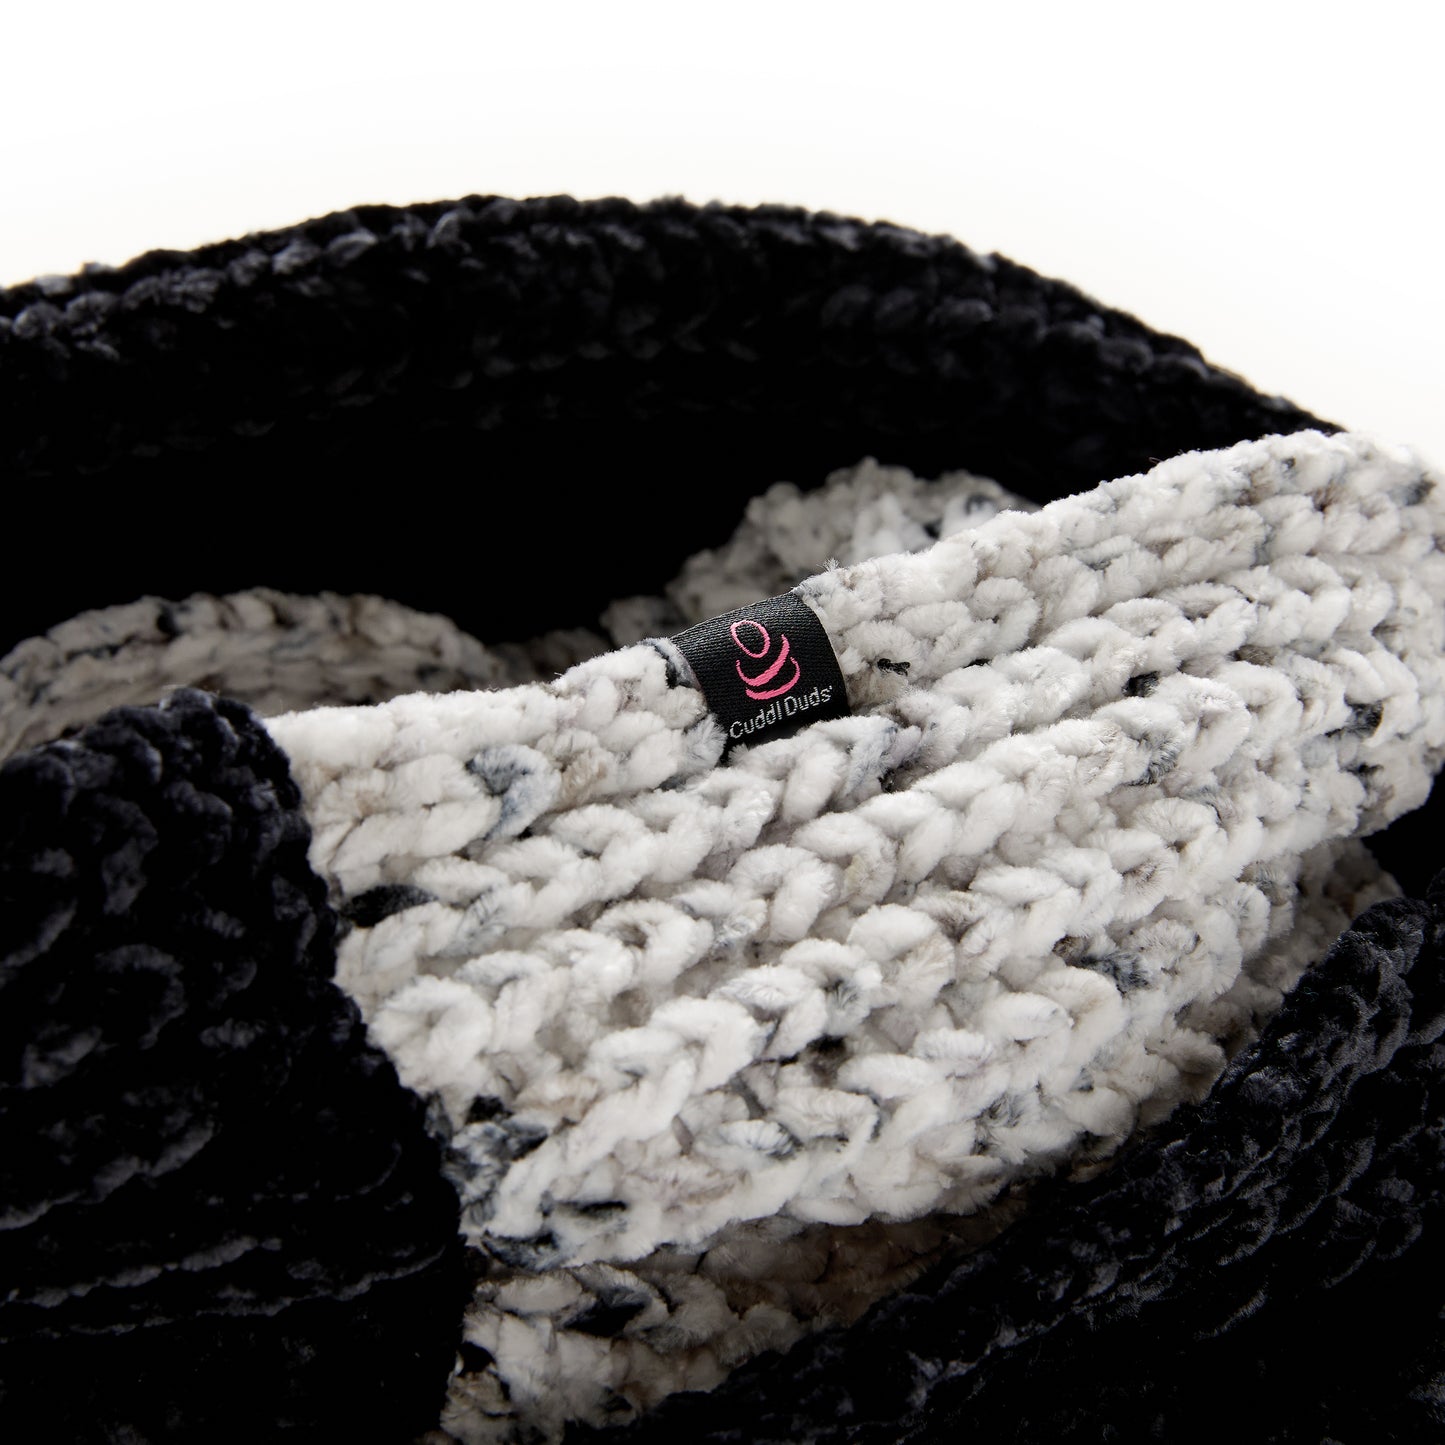 Black Multi;@A chenille black infinity scarf